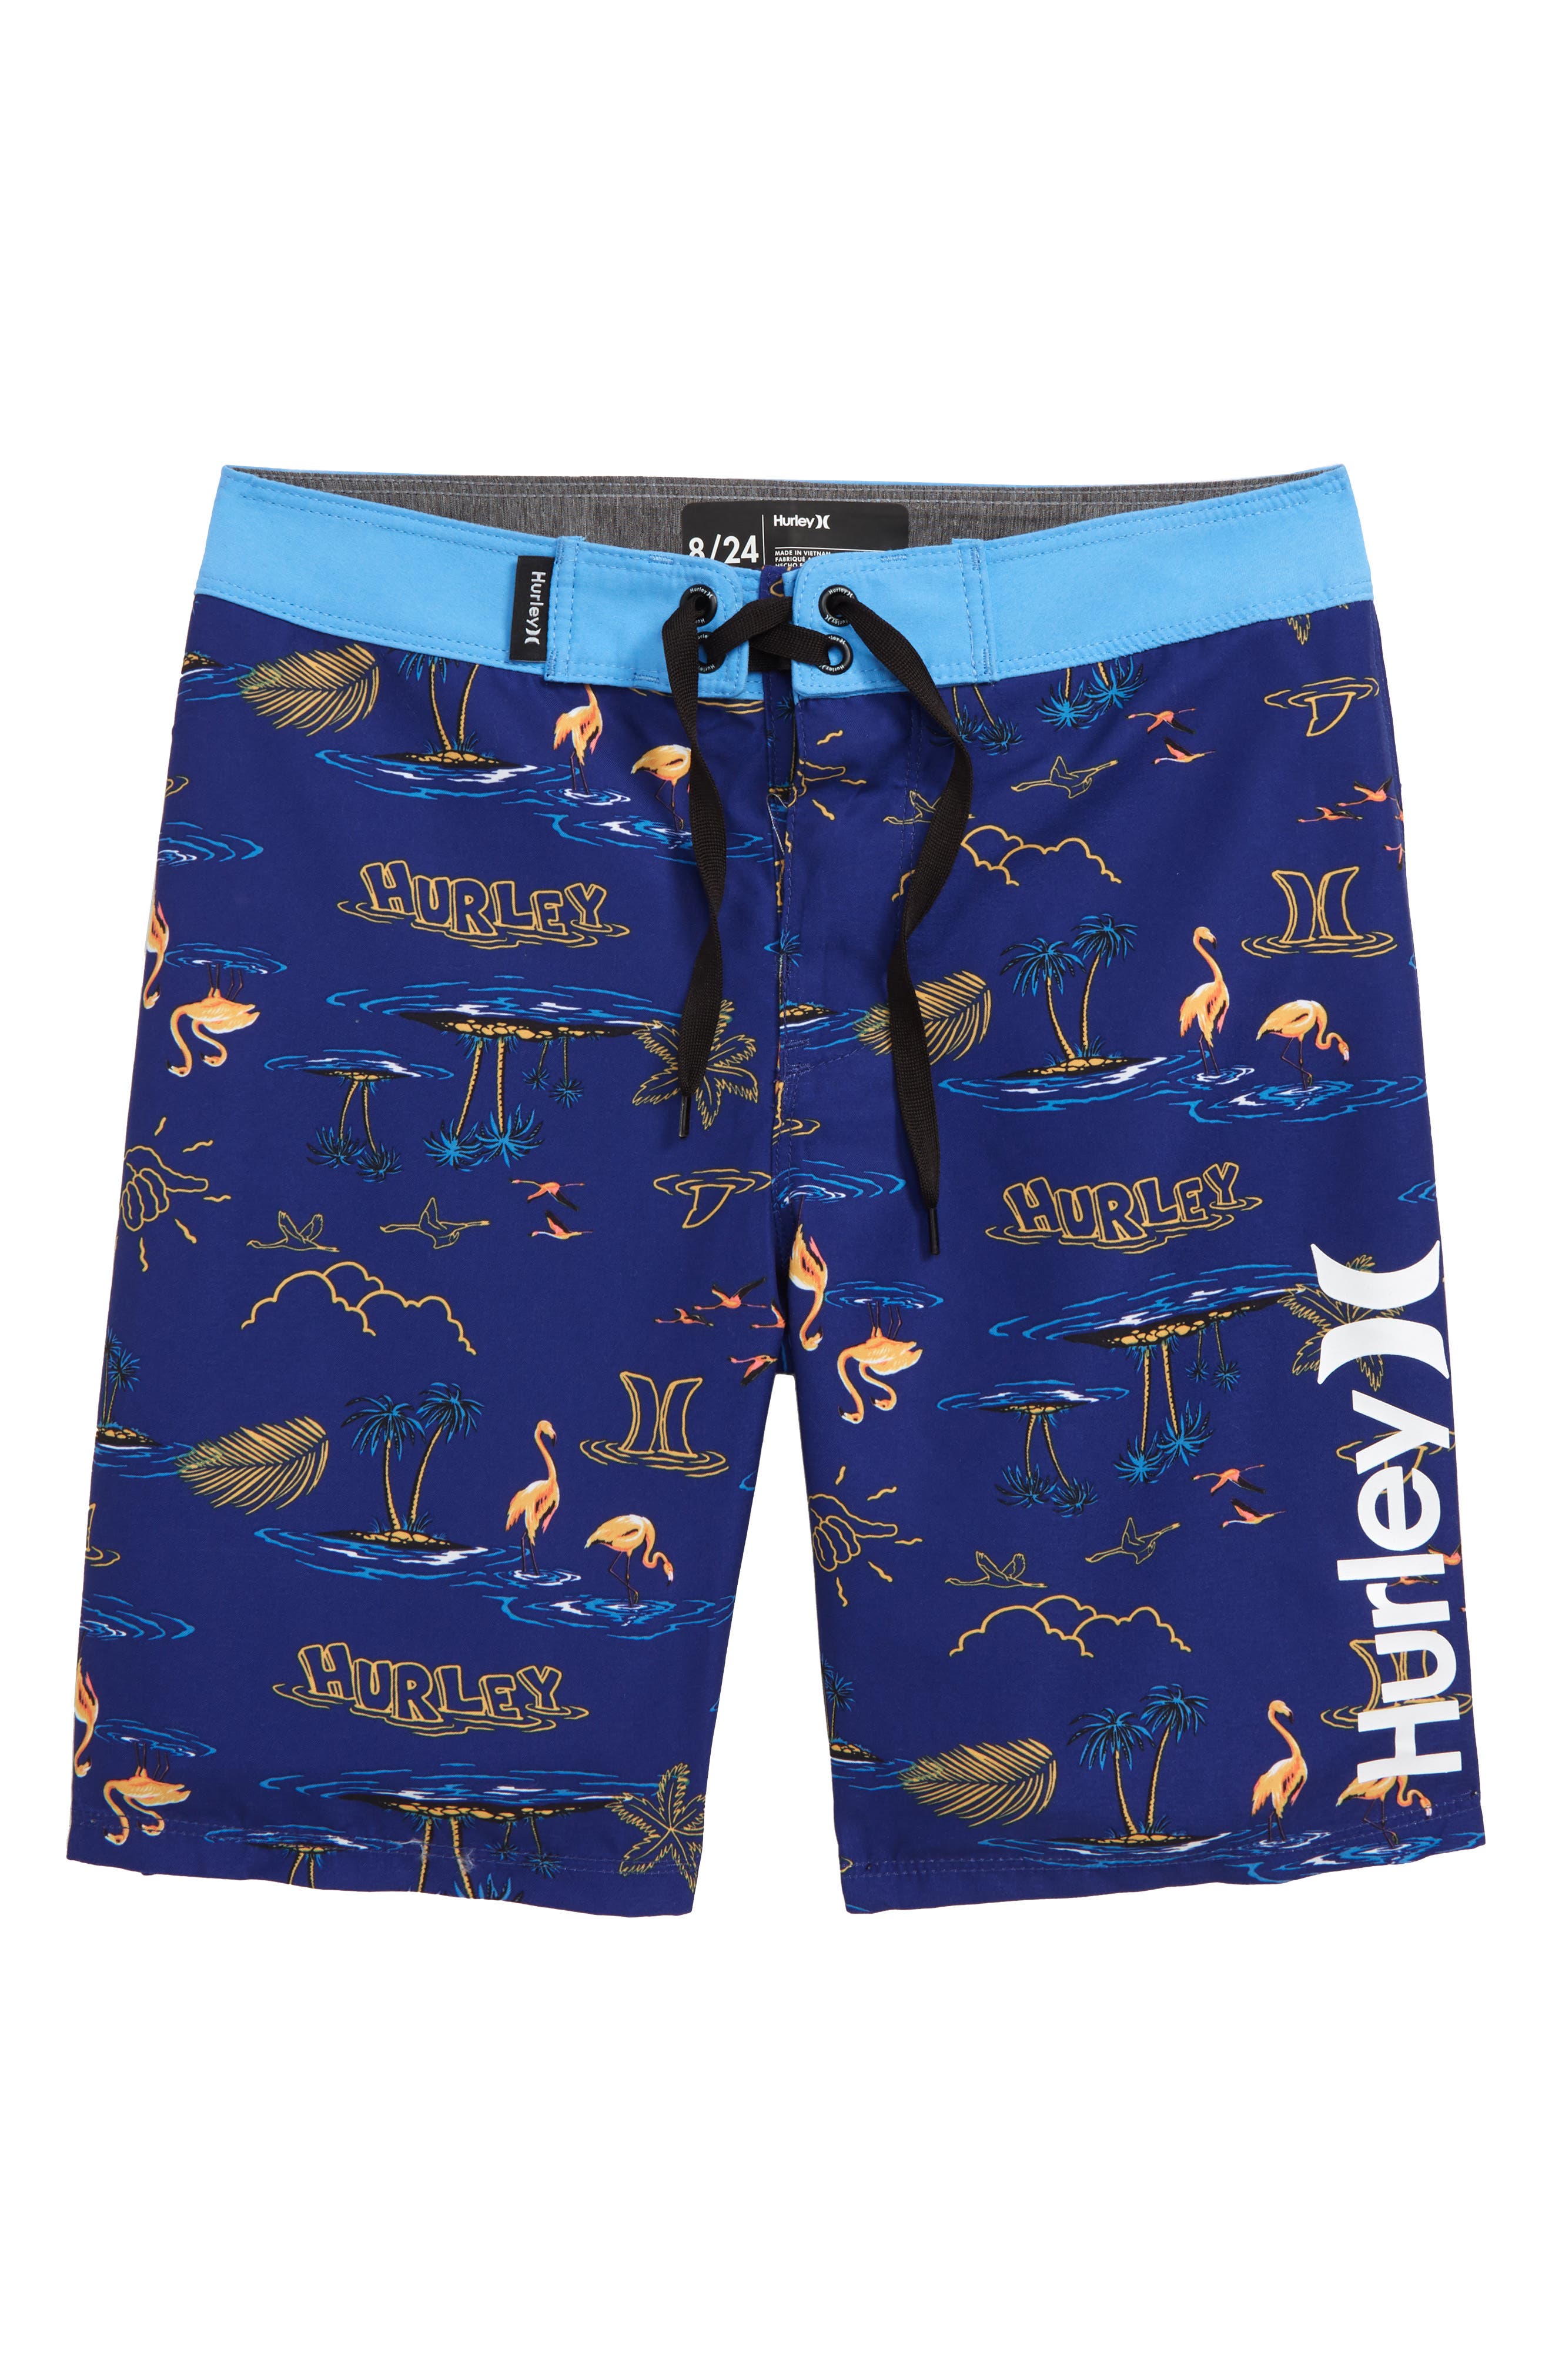 Hurley - Boys Swimwear and Beachwear